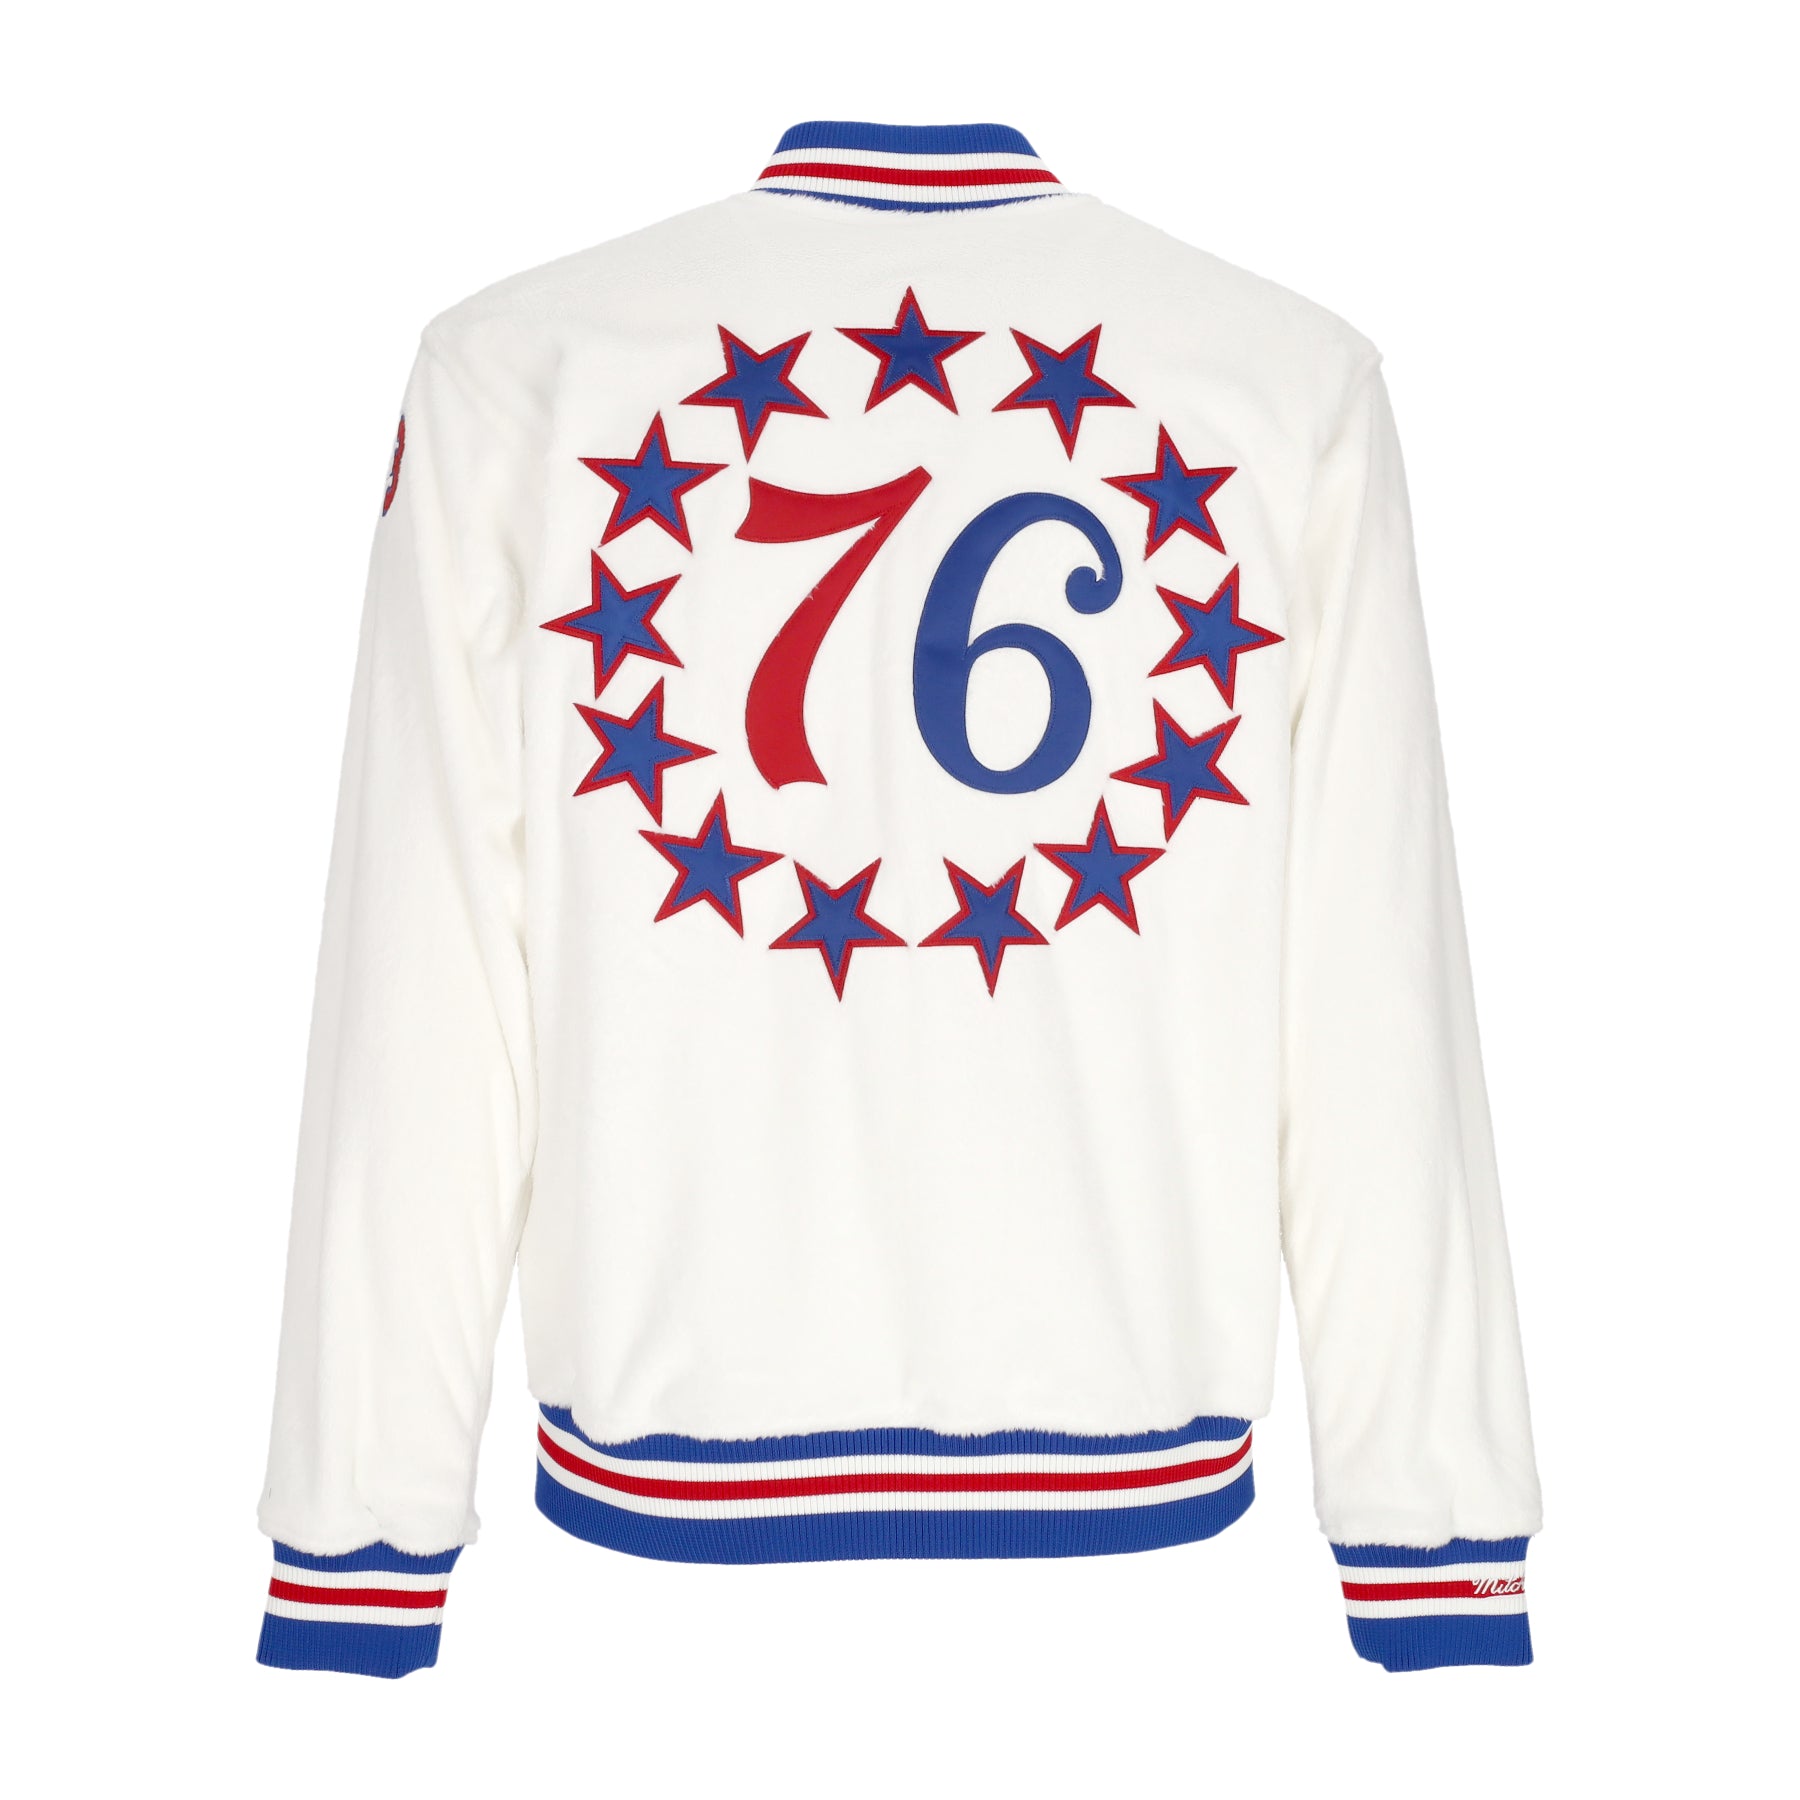 Orsetto Uomo Nba Shooting Shirt 1966 Wilt Chamberlain Phi76e White/original Team Colors ASSH6326-P7666WCMWHIT